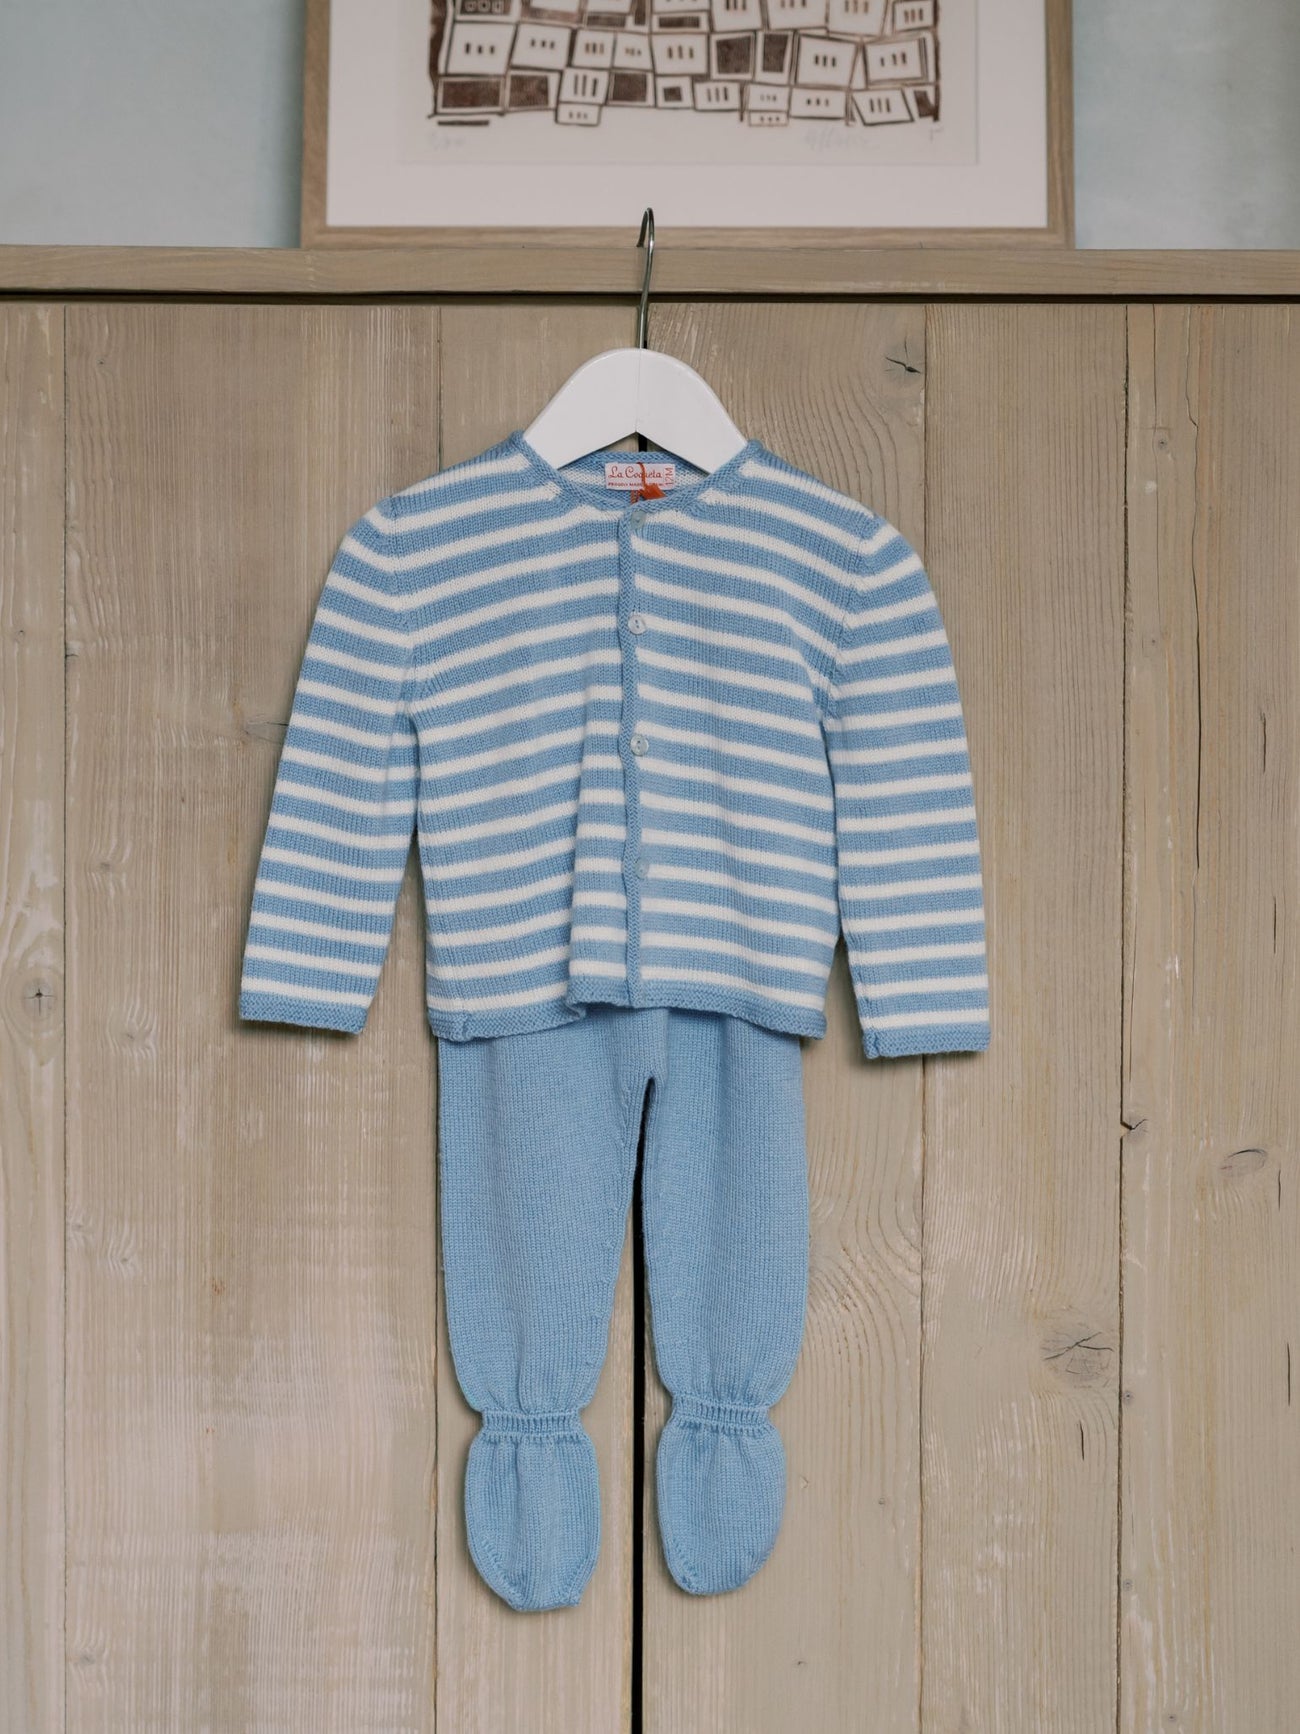 Dusty Blue Stripe Pinto Merino Baby Knitted Set